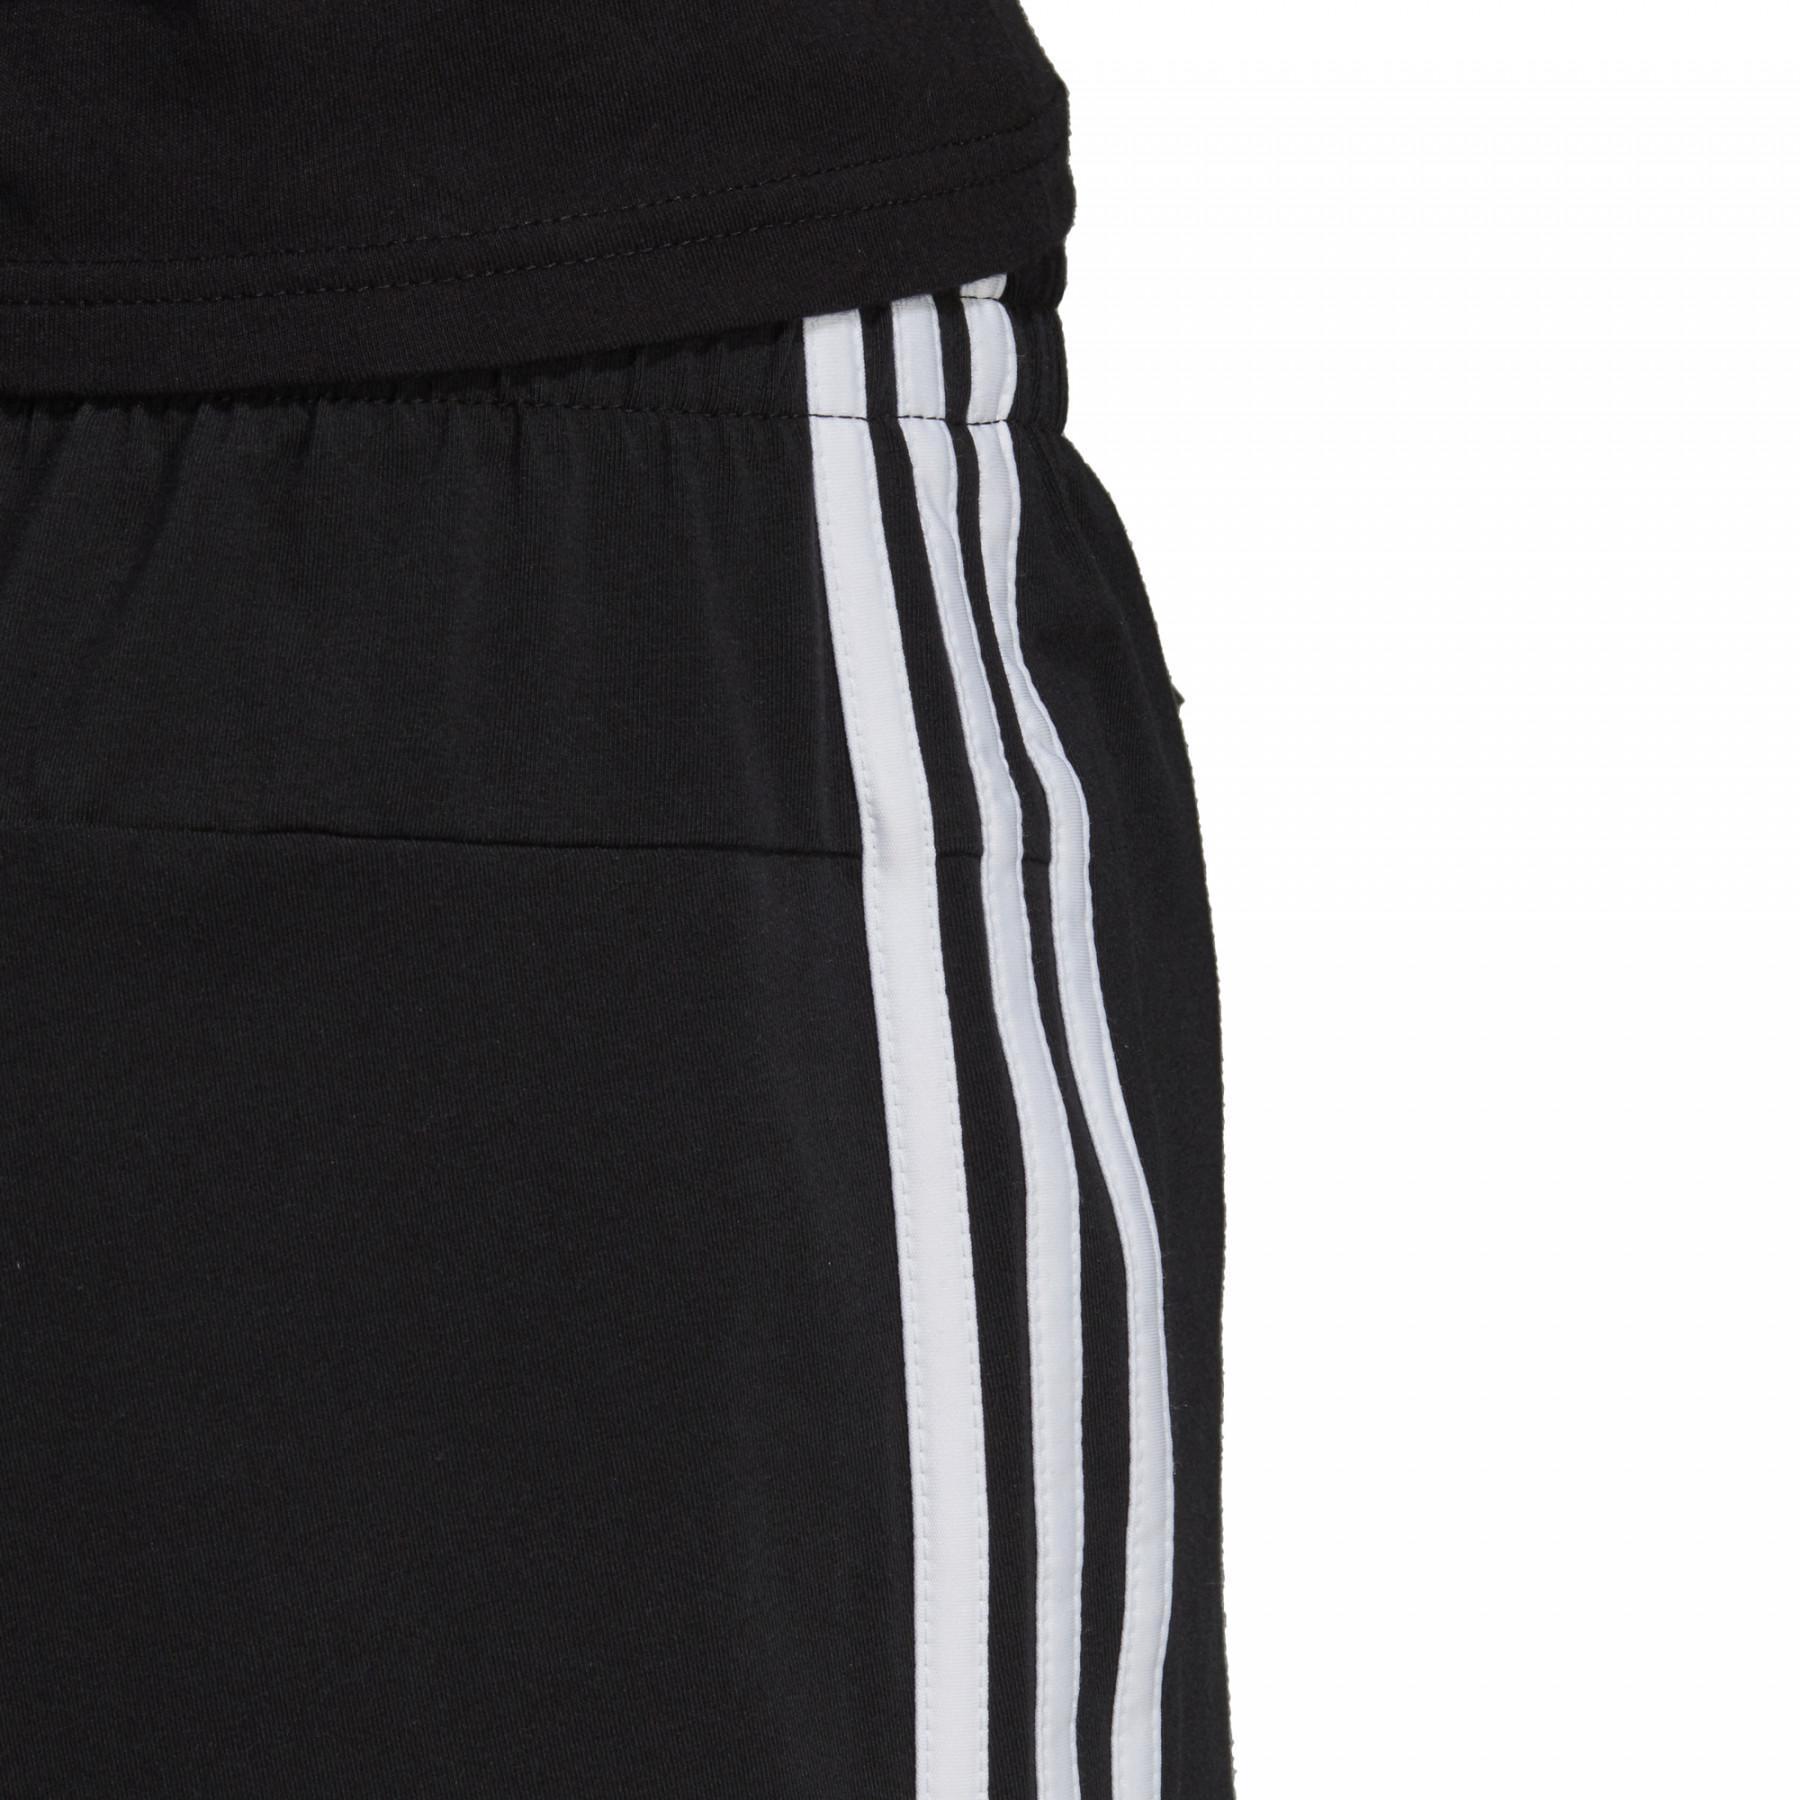 Women's shorts adidas Essentials 3-Stripes